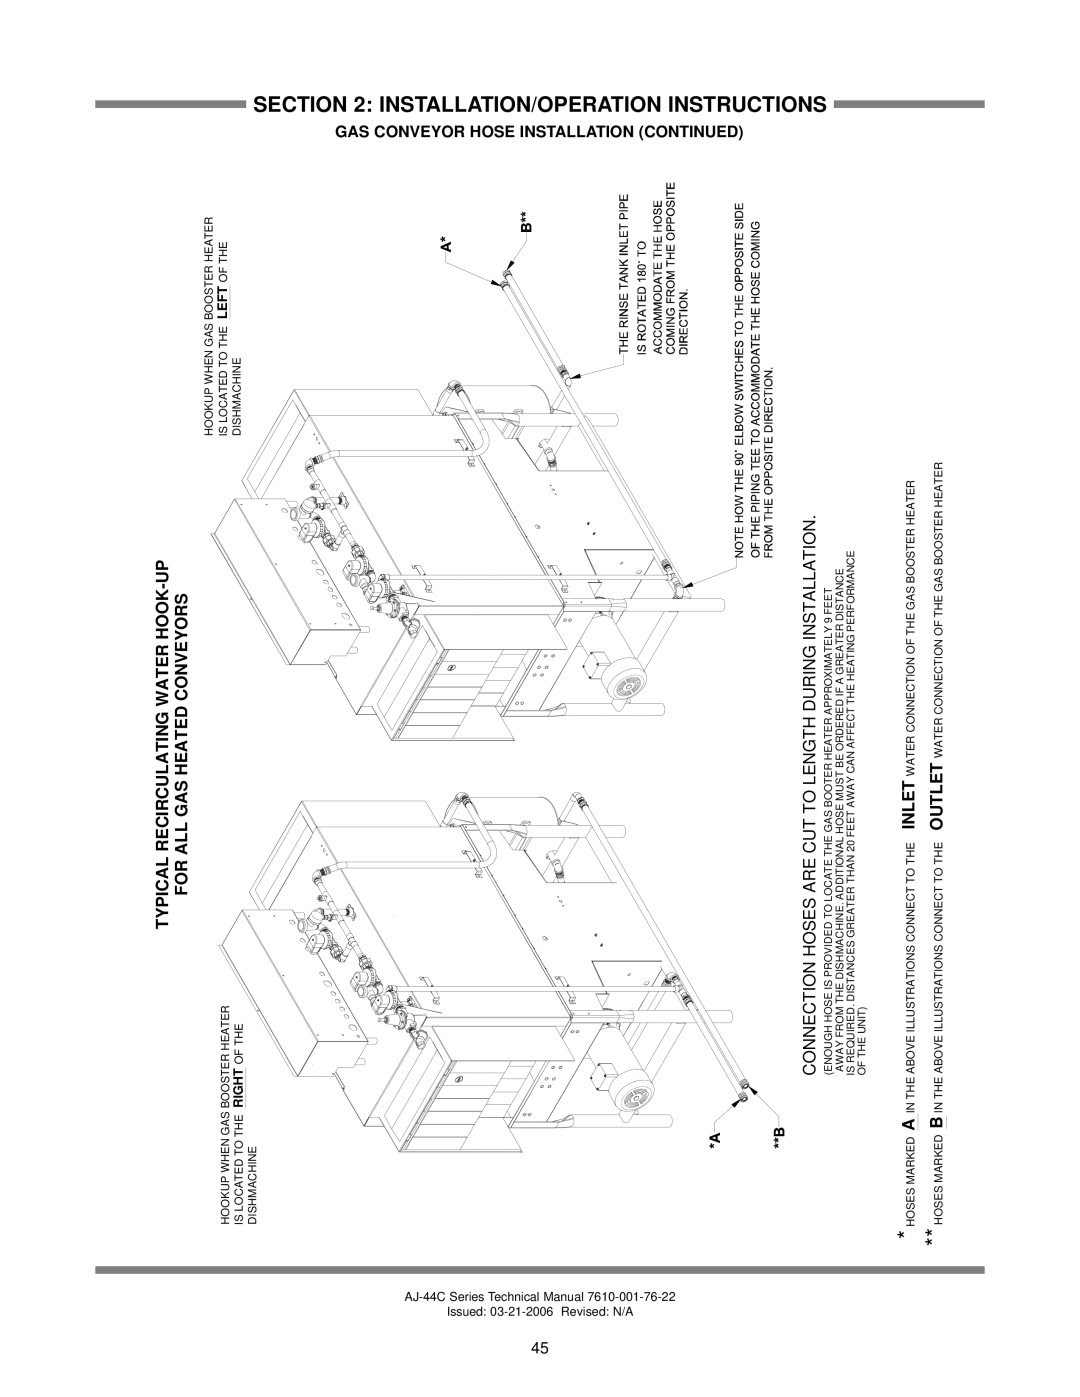 Jackson AJ-44 technical manual Section, Installation/Operationinstructions, Conveyor Hose Installation Continued 